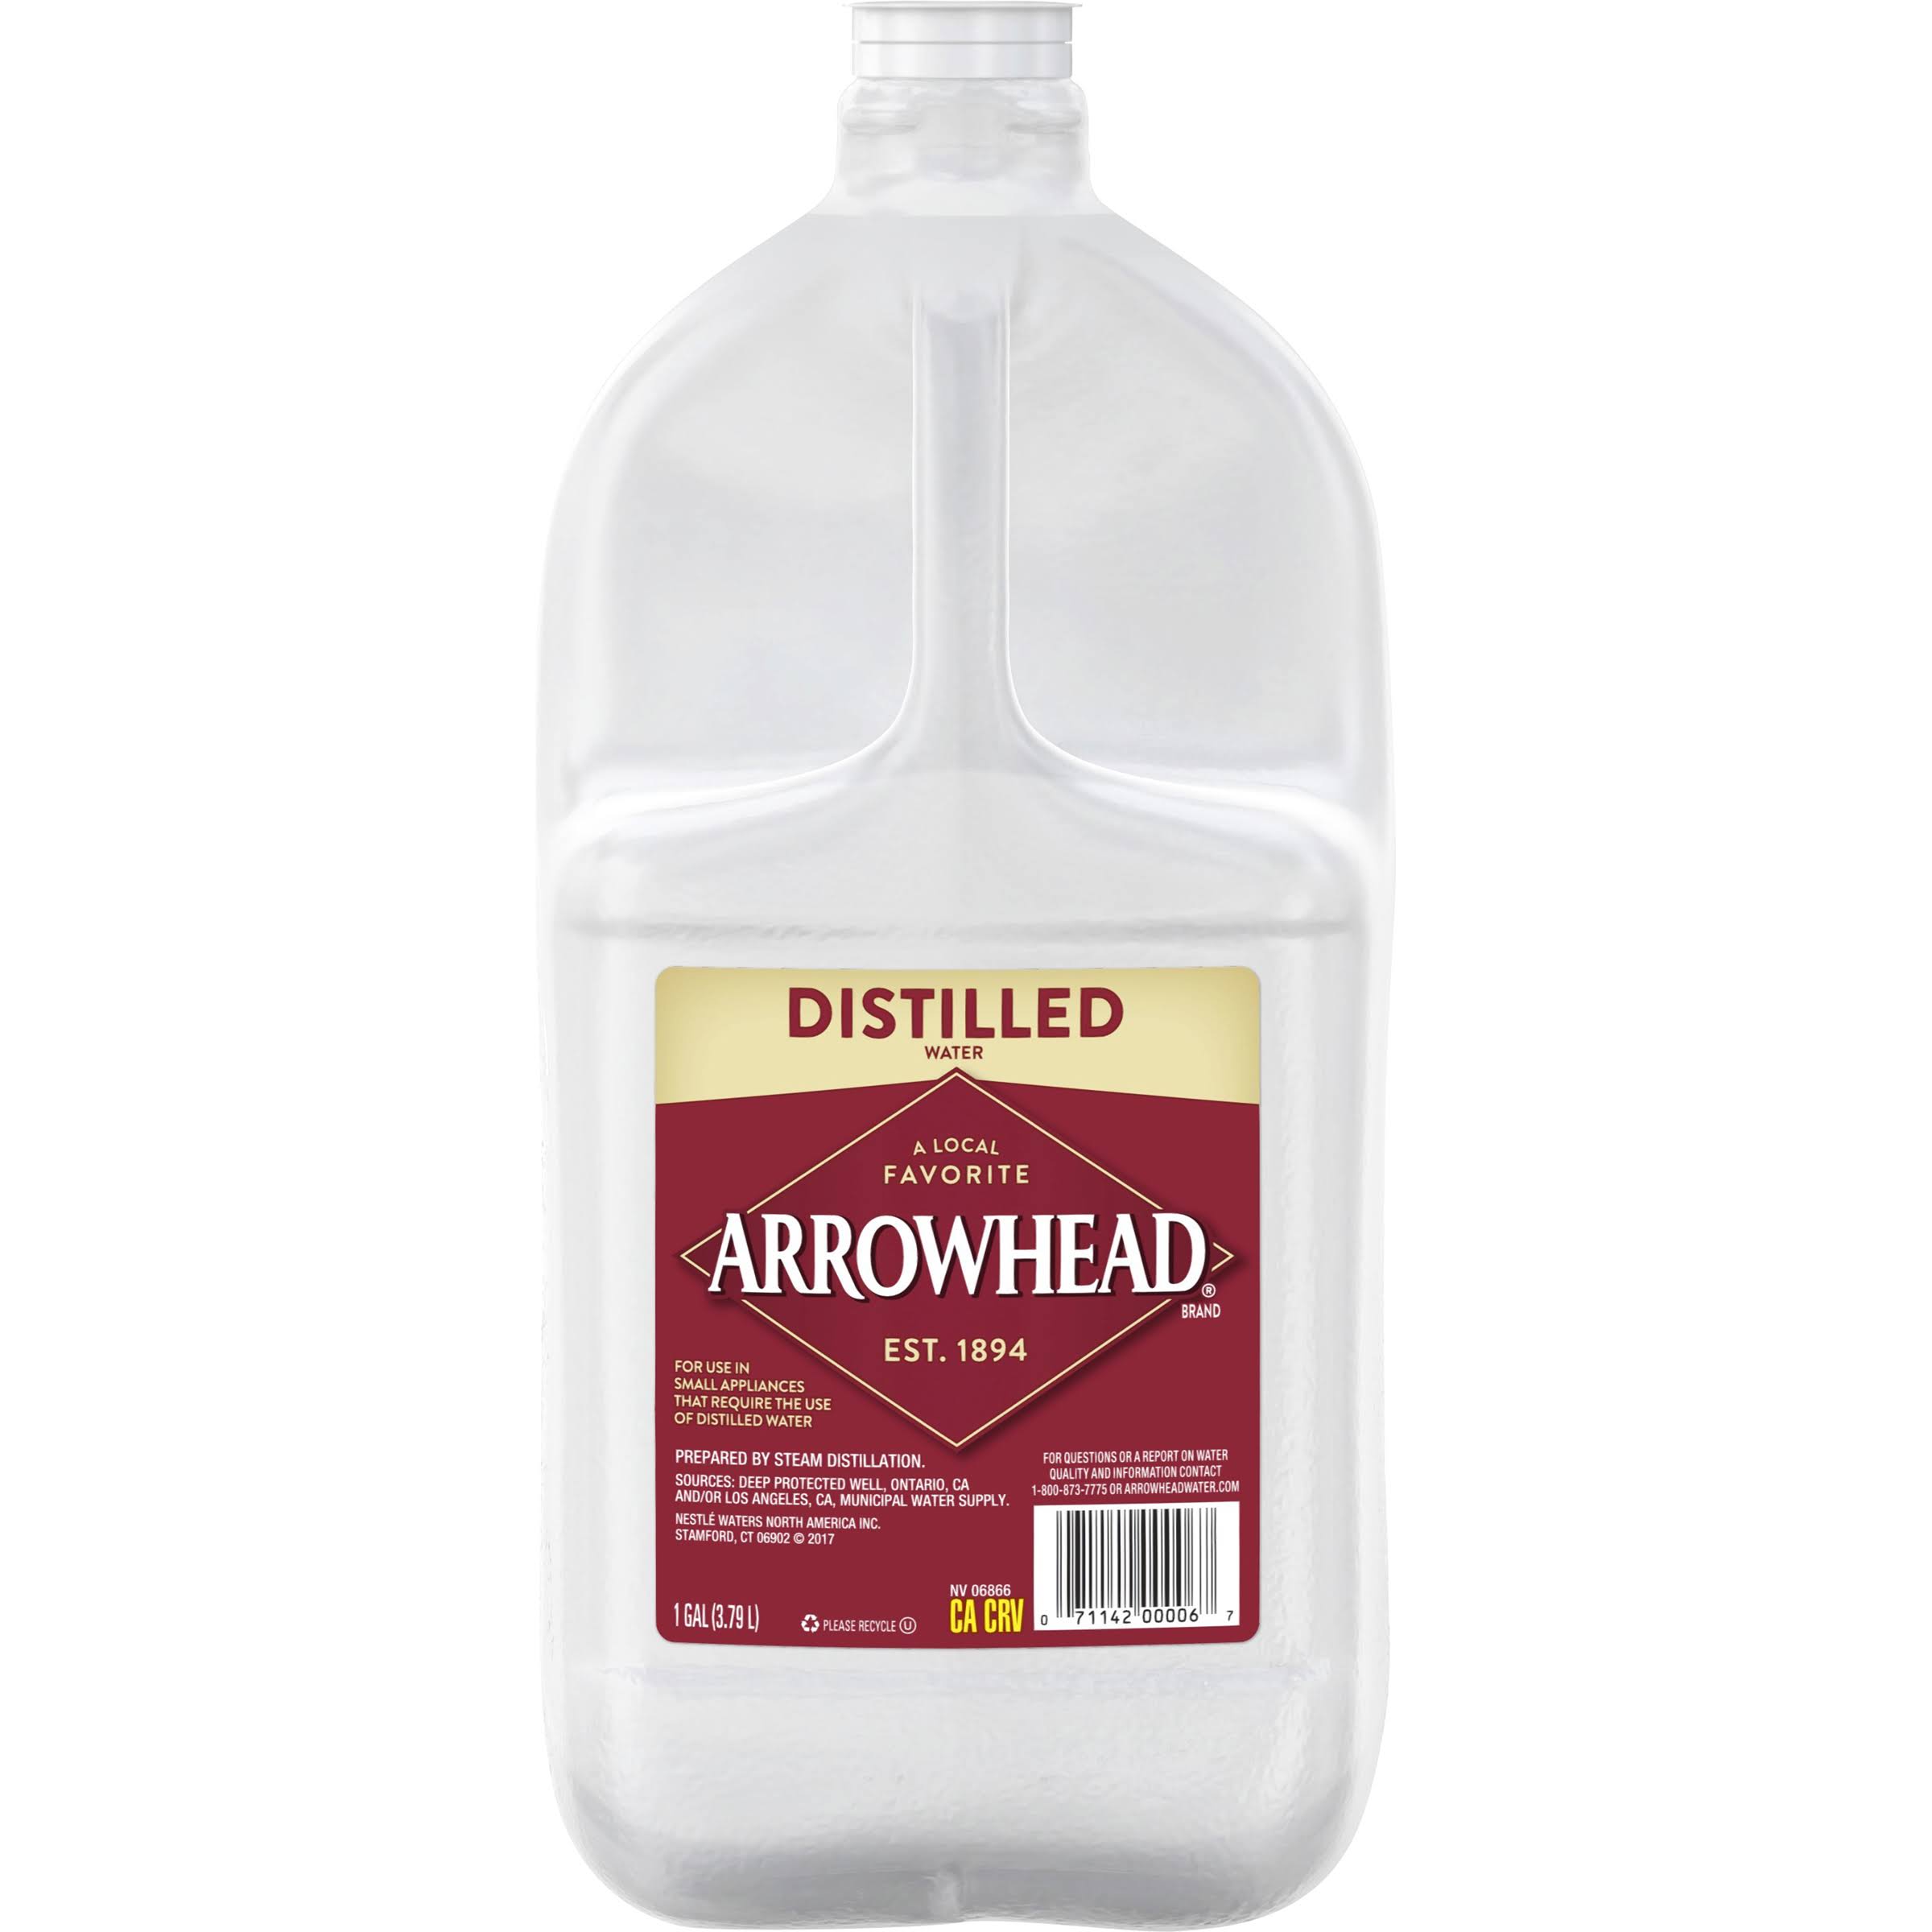 Arrowhead Brand Distilled Water, 127.99 oz